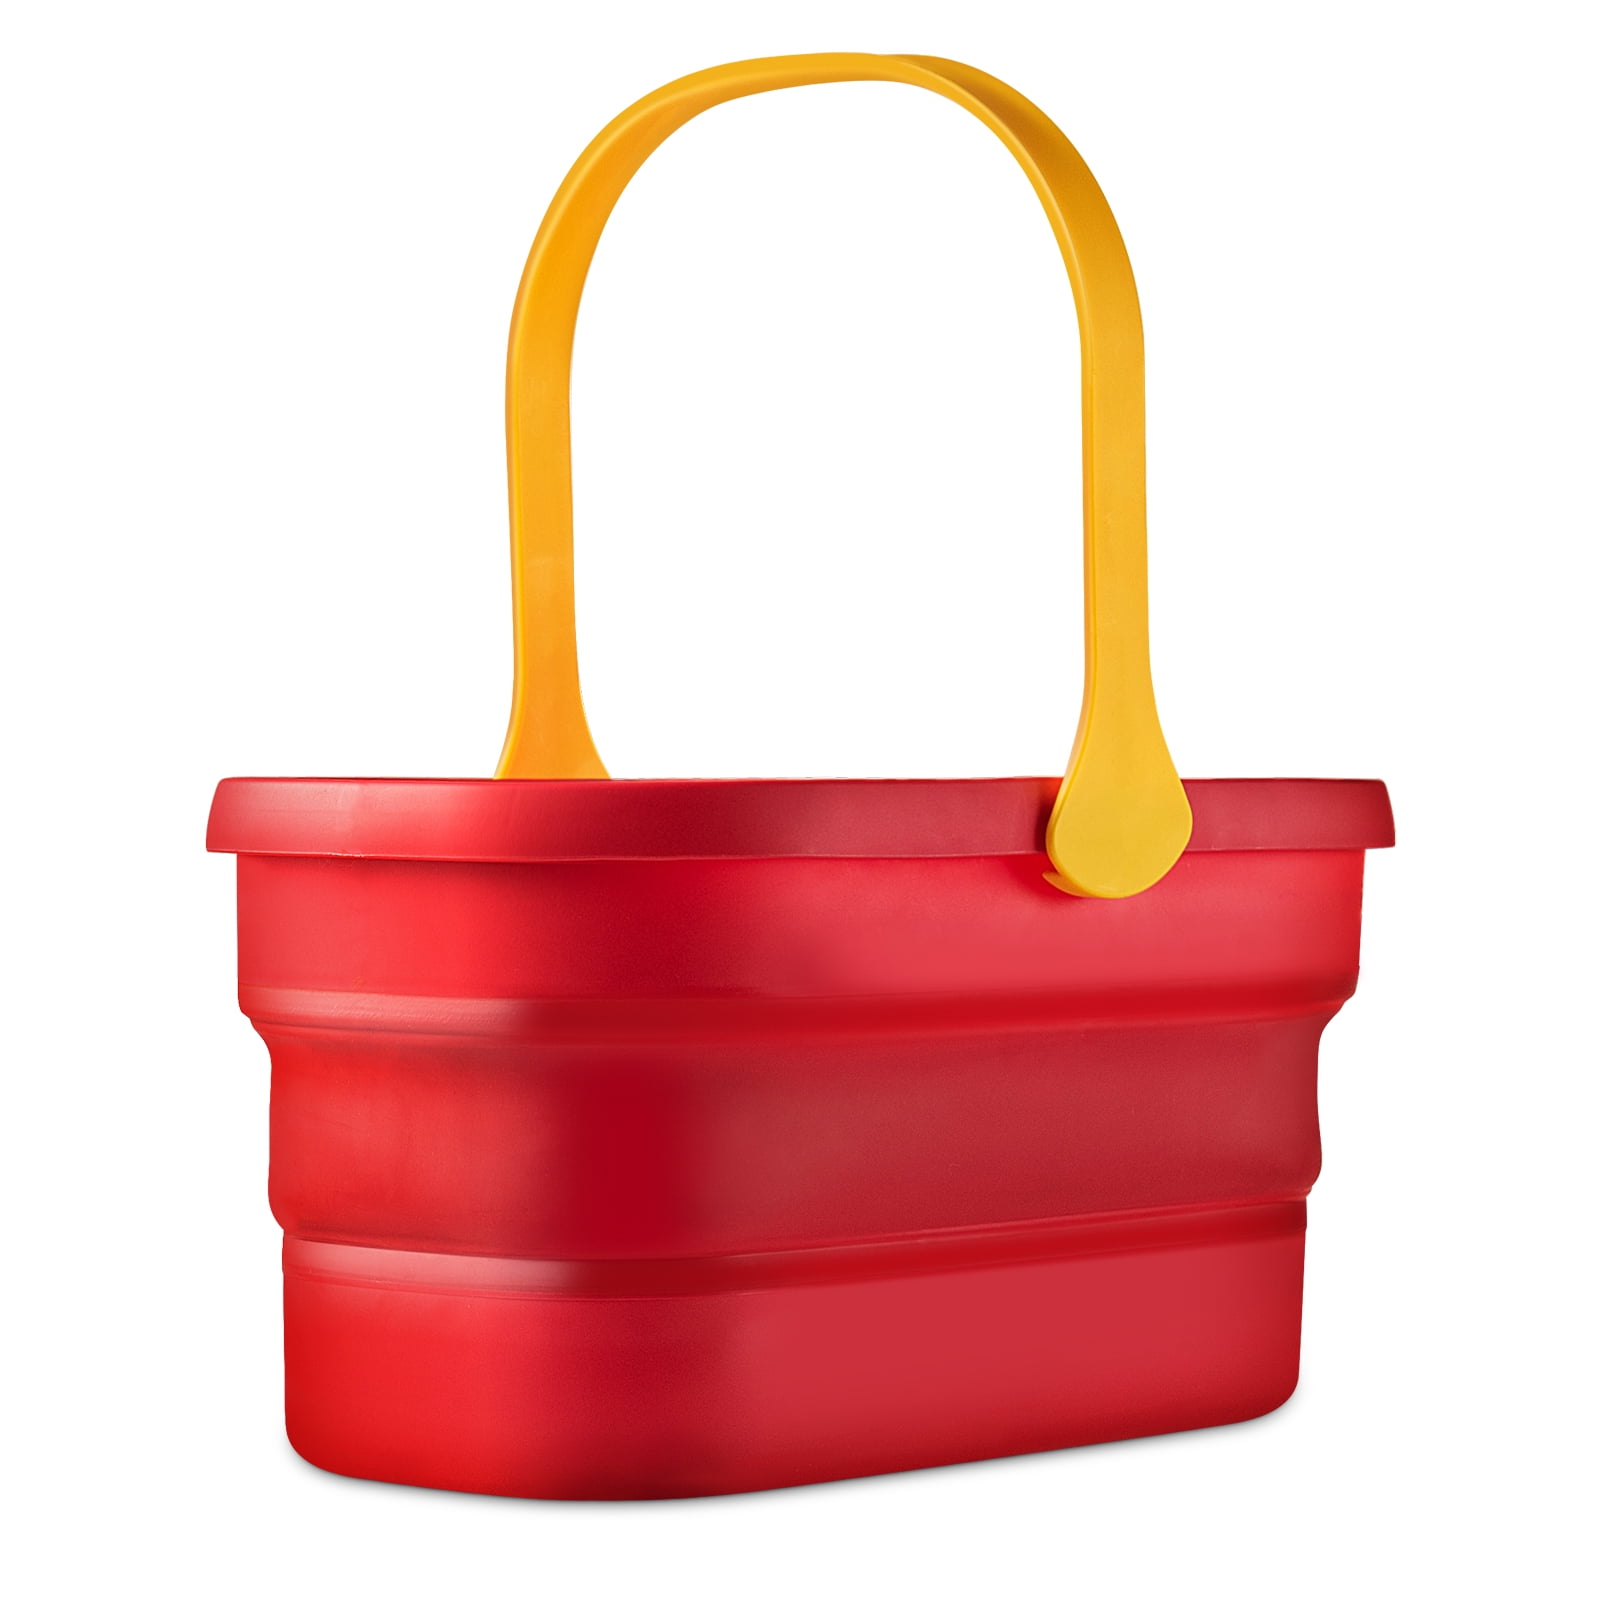 Household Essentials Bucket Caddy Red/black : Target